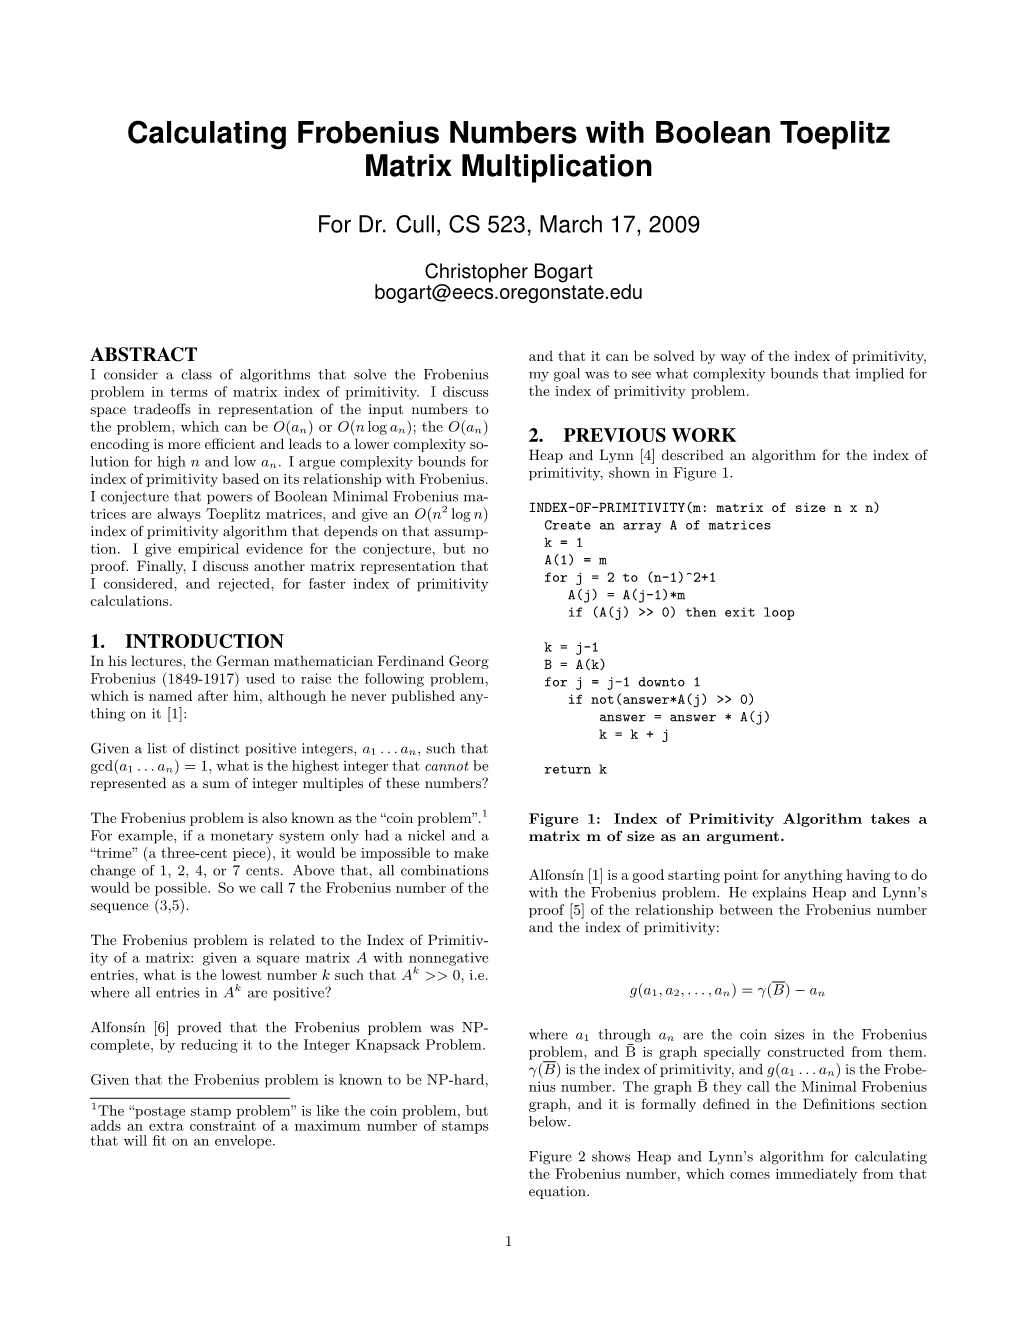 Calculating Frobenius Numbers with Boolean Toeplitz Matrix Multiplication